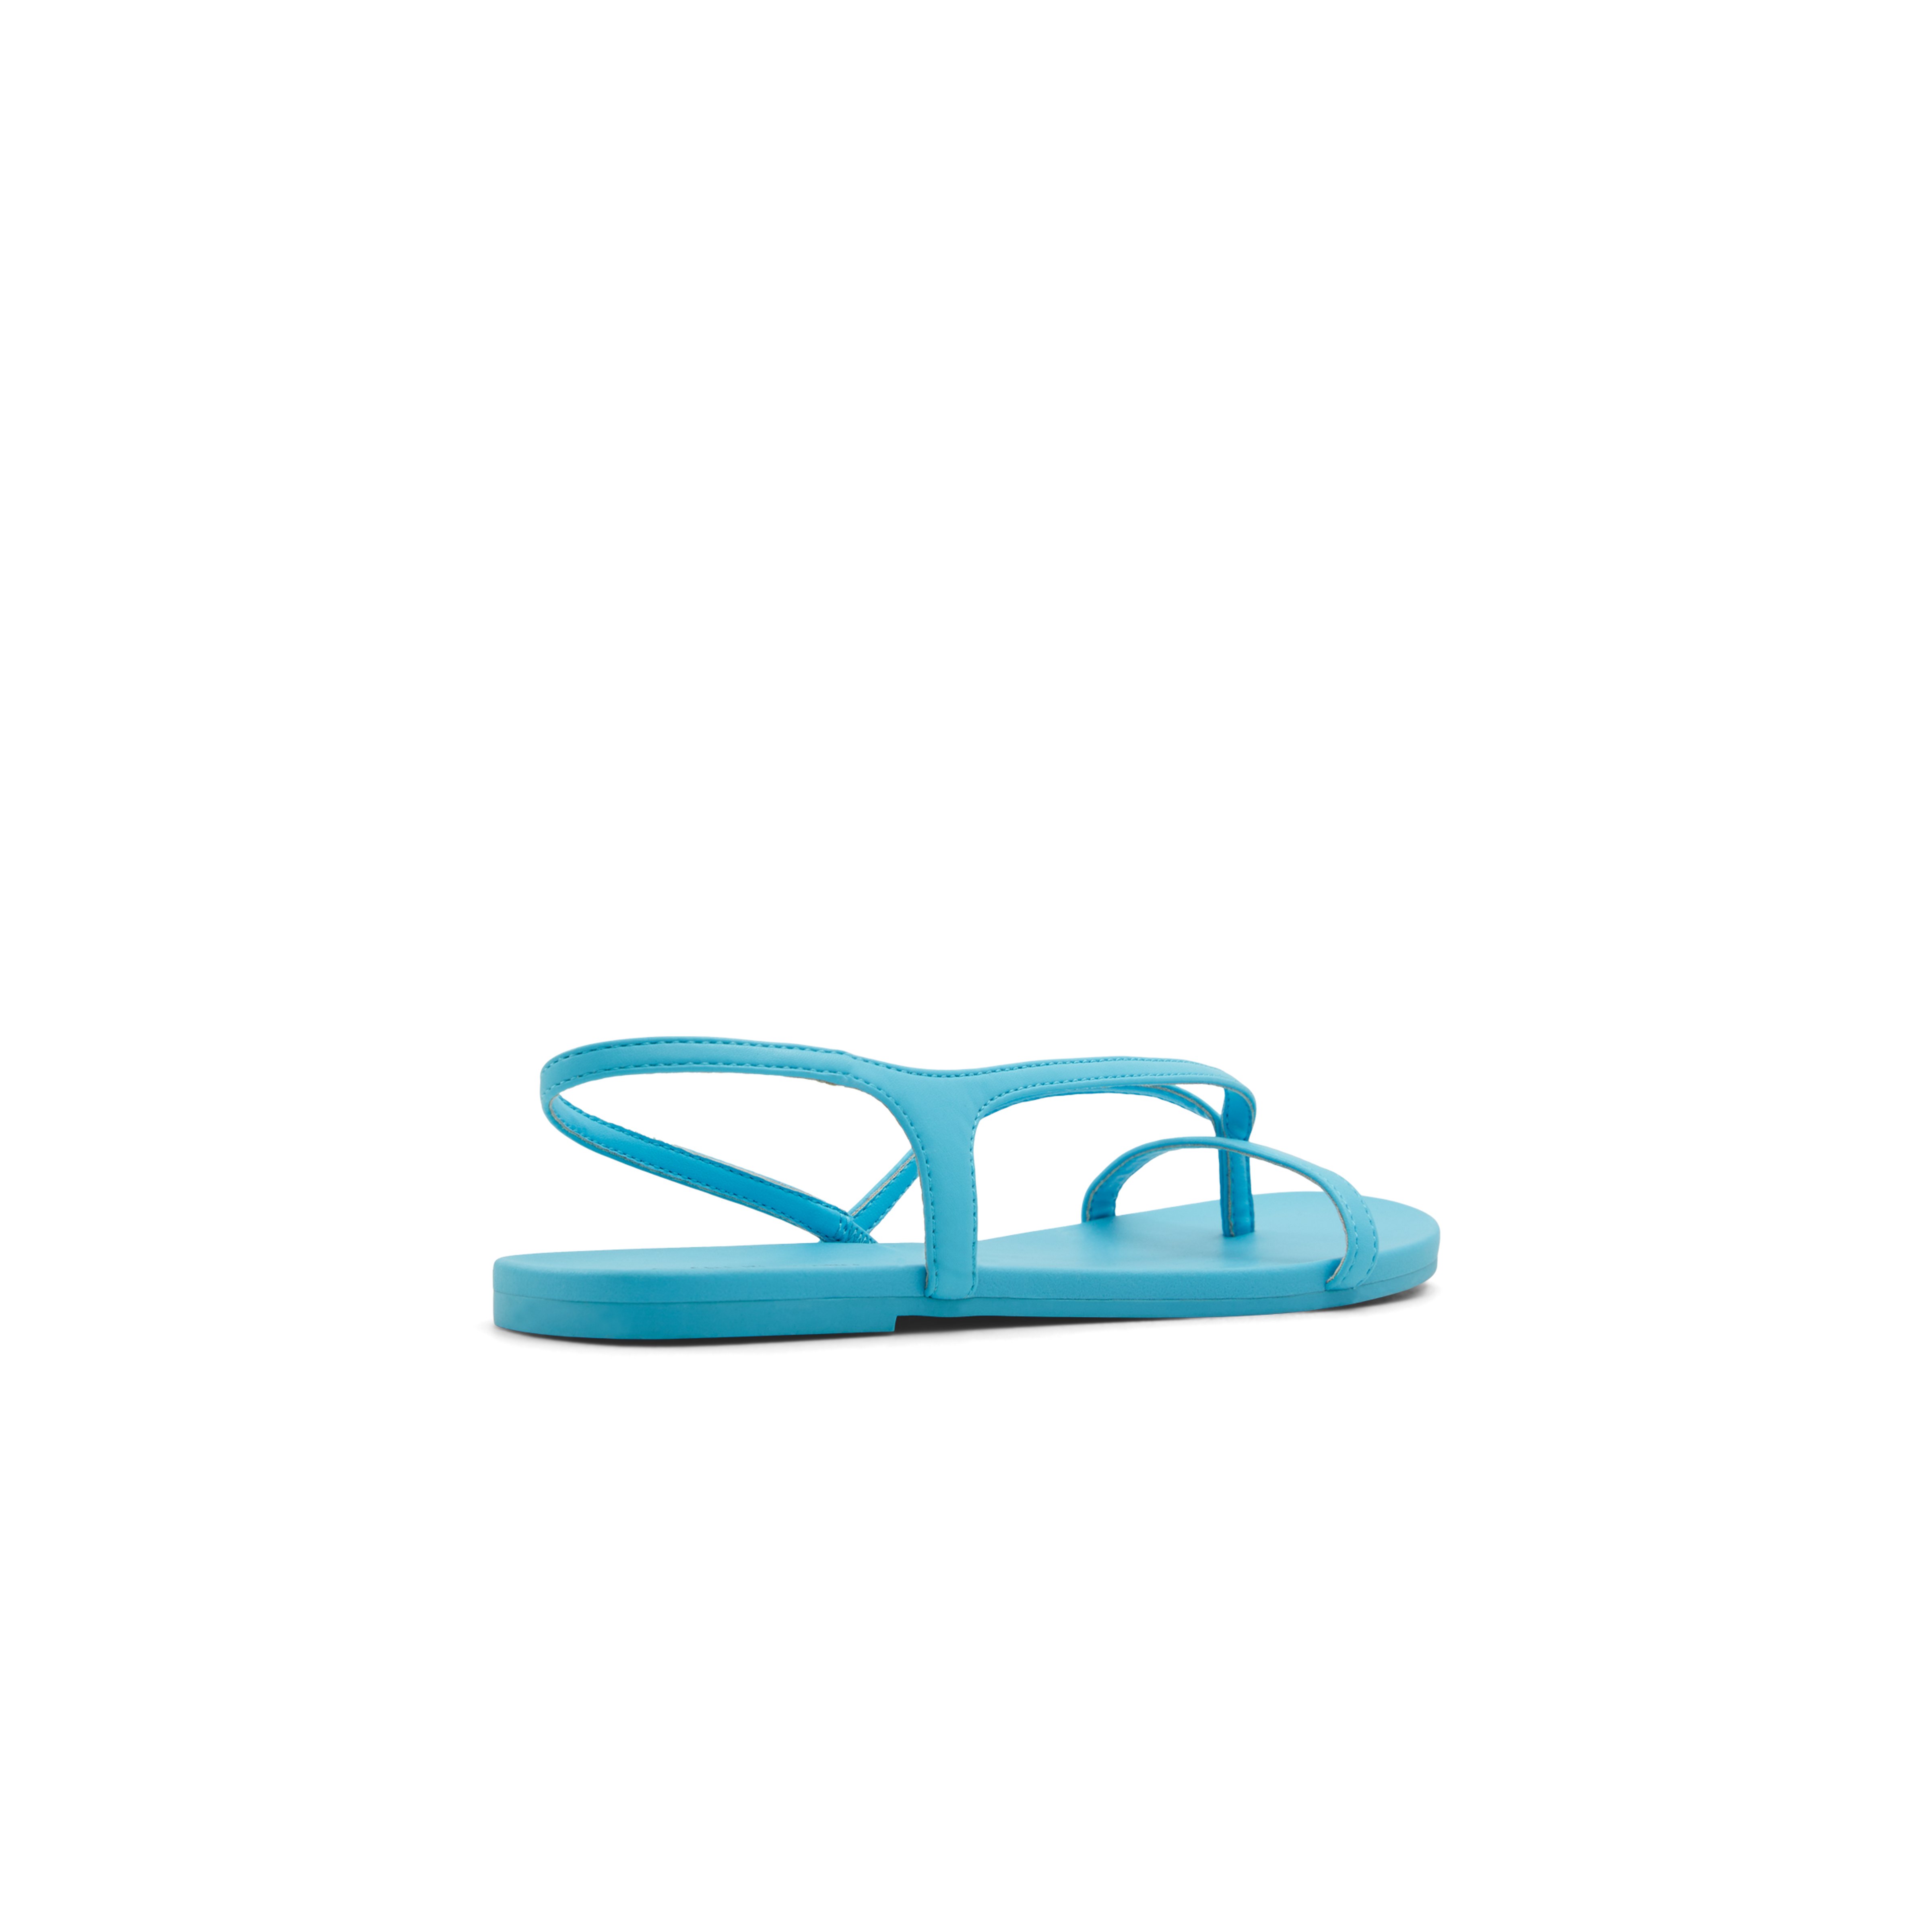 Montebello Women's Blue Flat Sandals image number 2